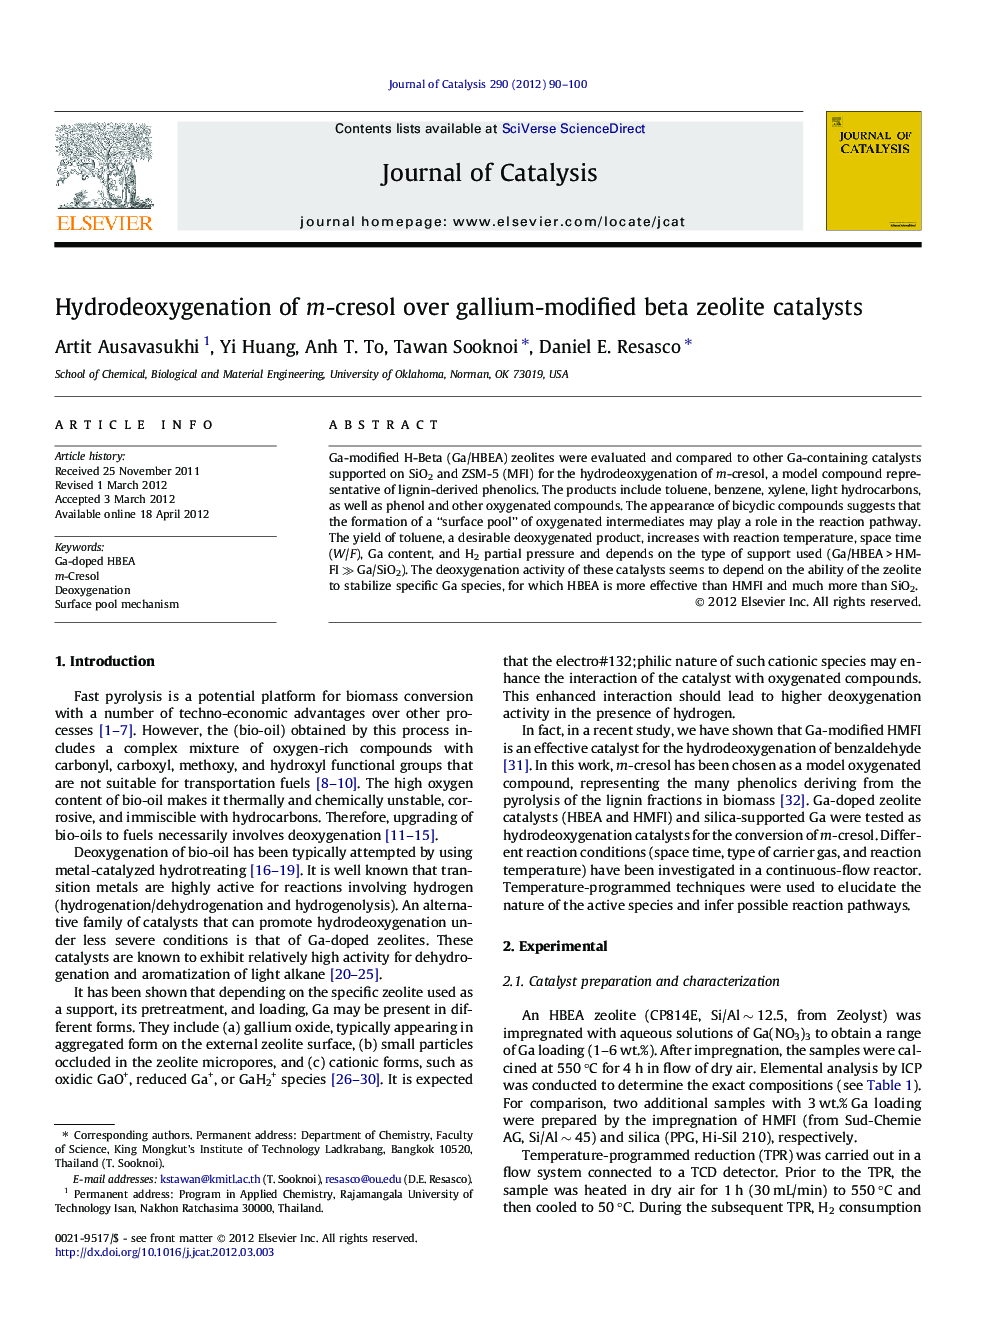 Hydrodeoxygenation of m-cresol over gallium-modified beta zeolite catalysts